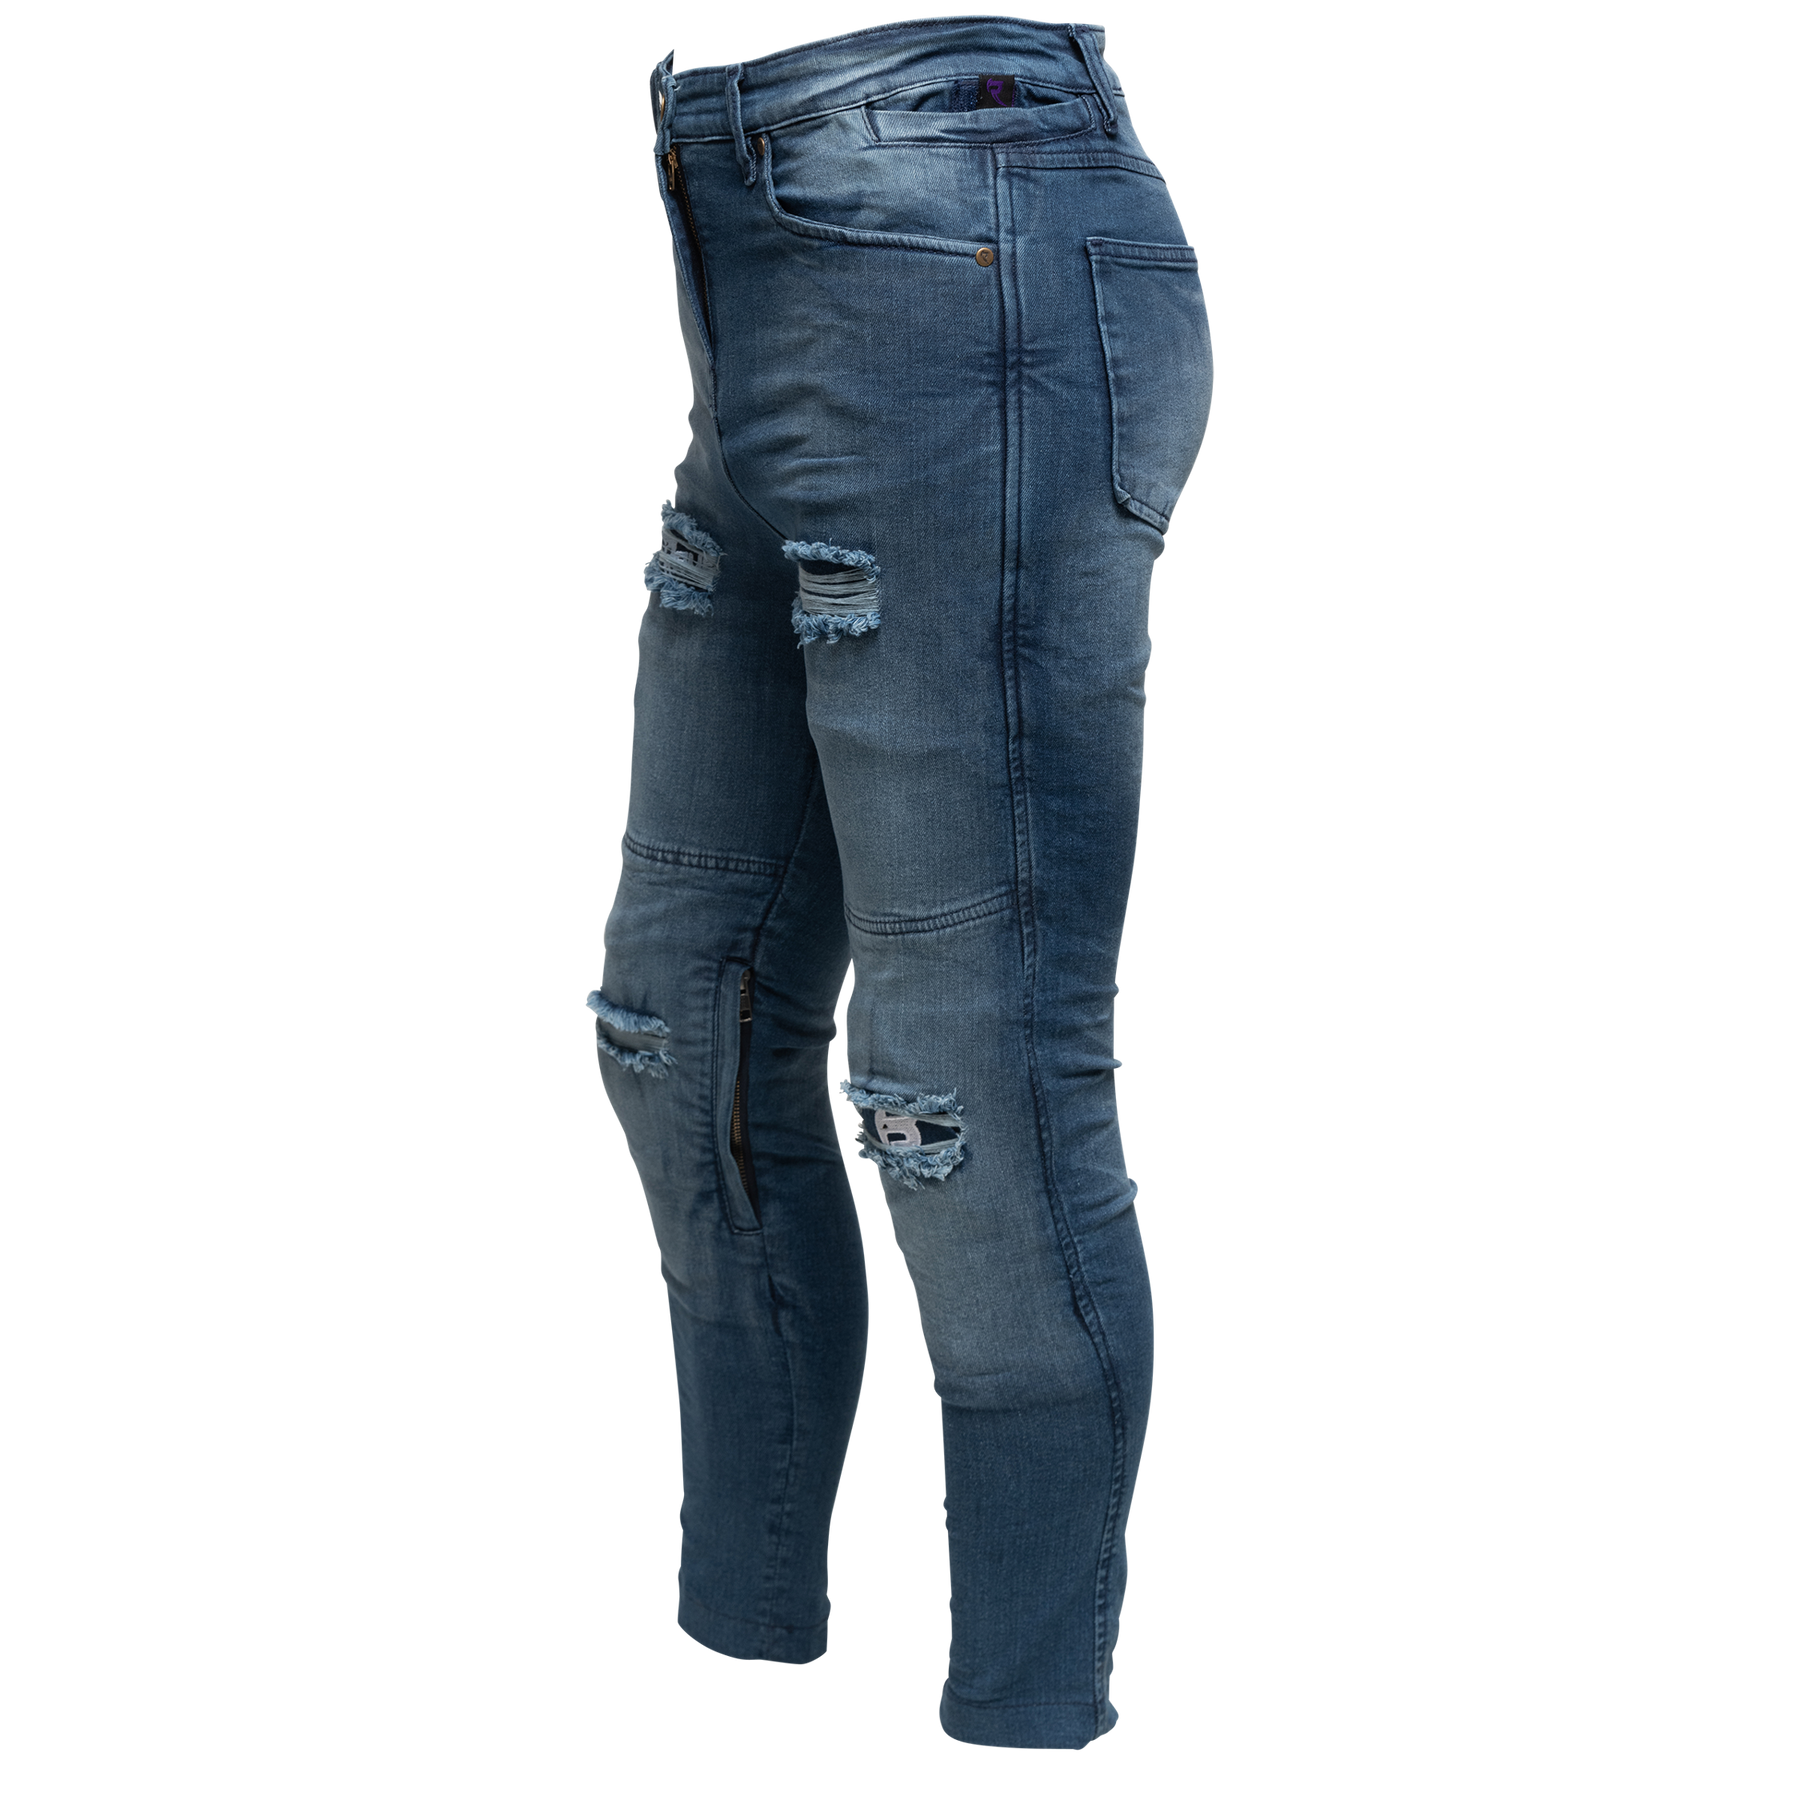 Women's Jean-Netics High Rise 5 Pocket Skinny Jeans | Duluth Trading Company